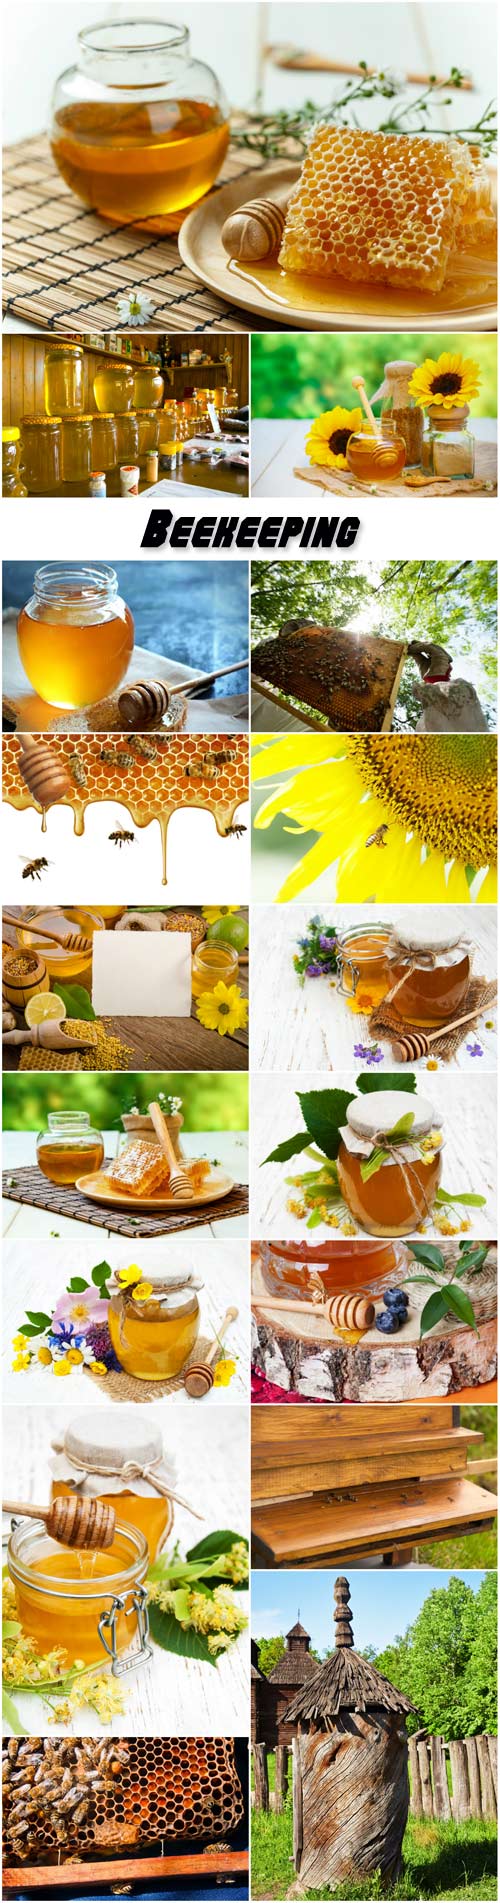 Beekeeping, fresh honey